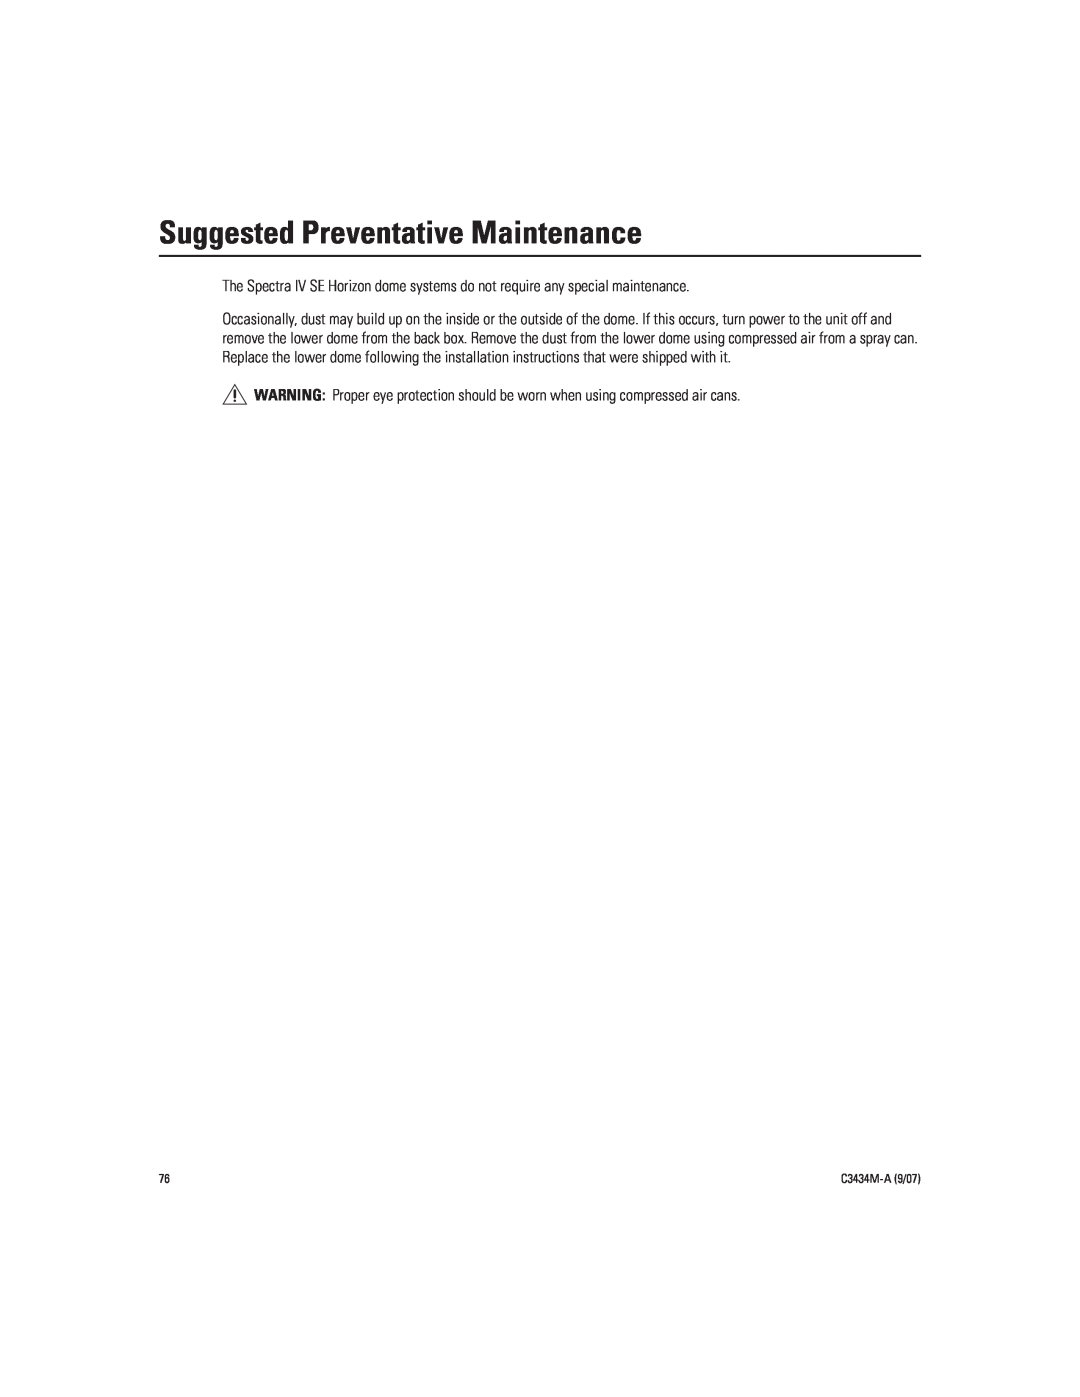 Pelco IV SE manual Suggested Preventative Maintenance, C3434M-A9/07 